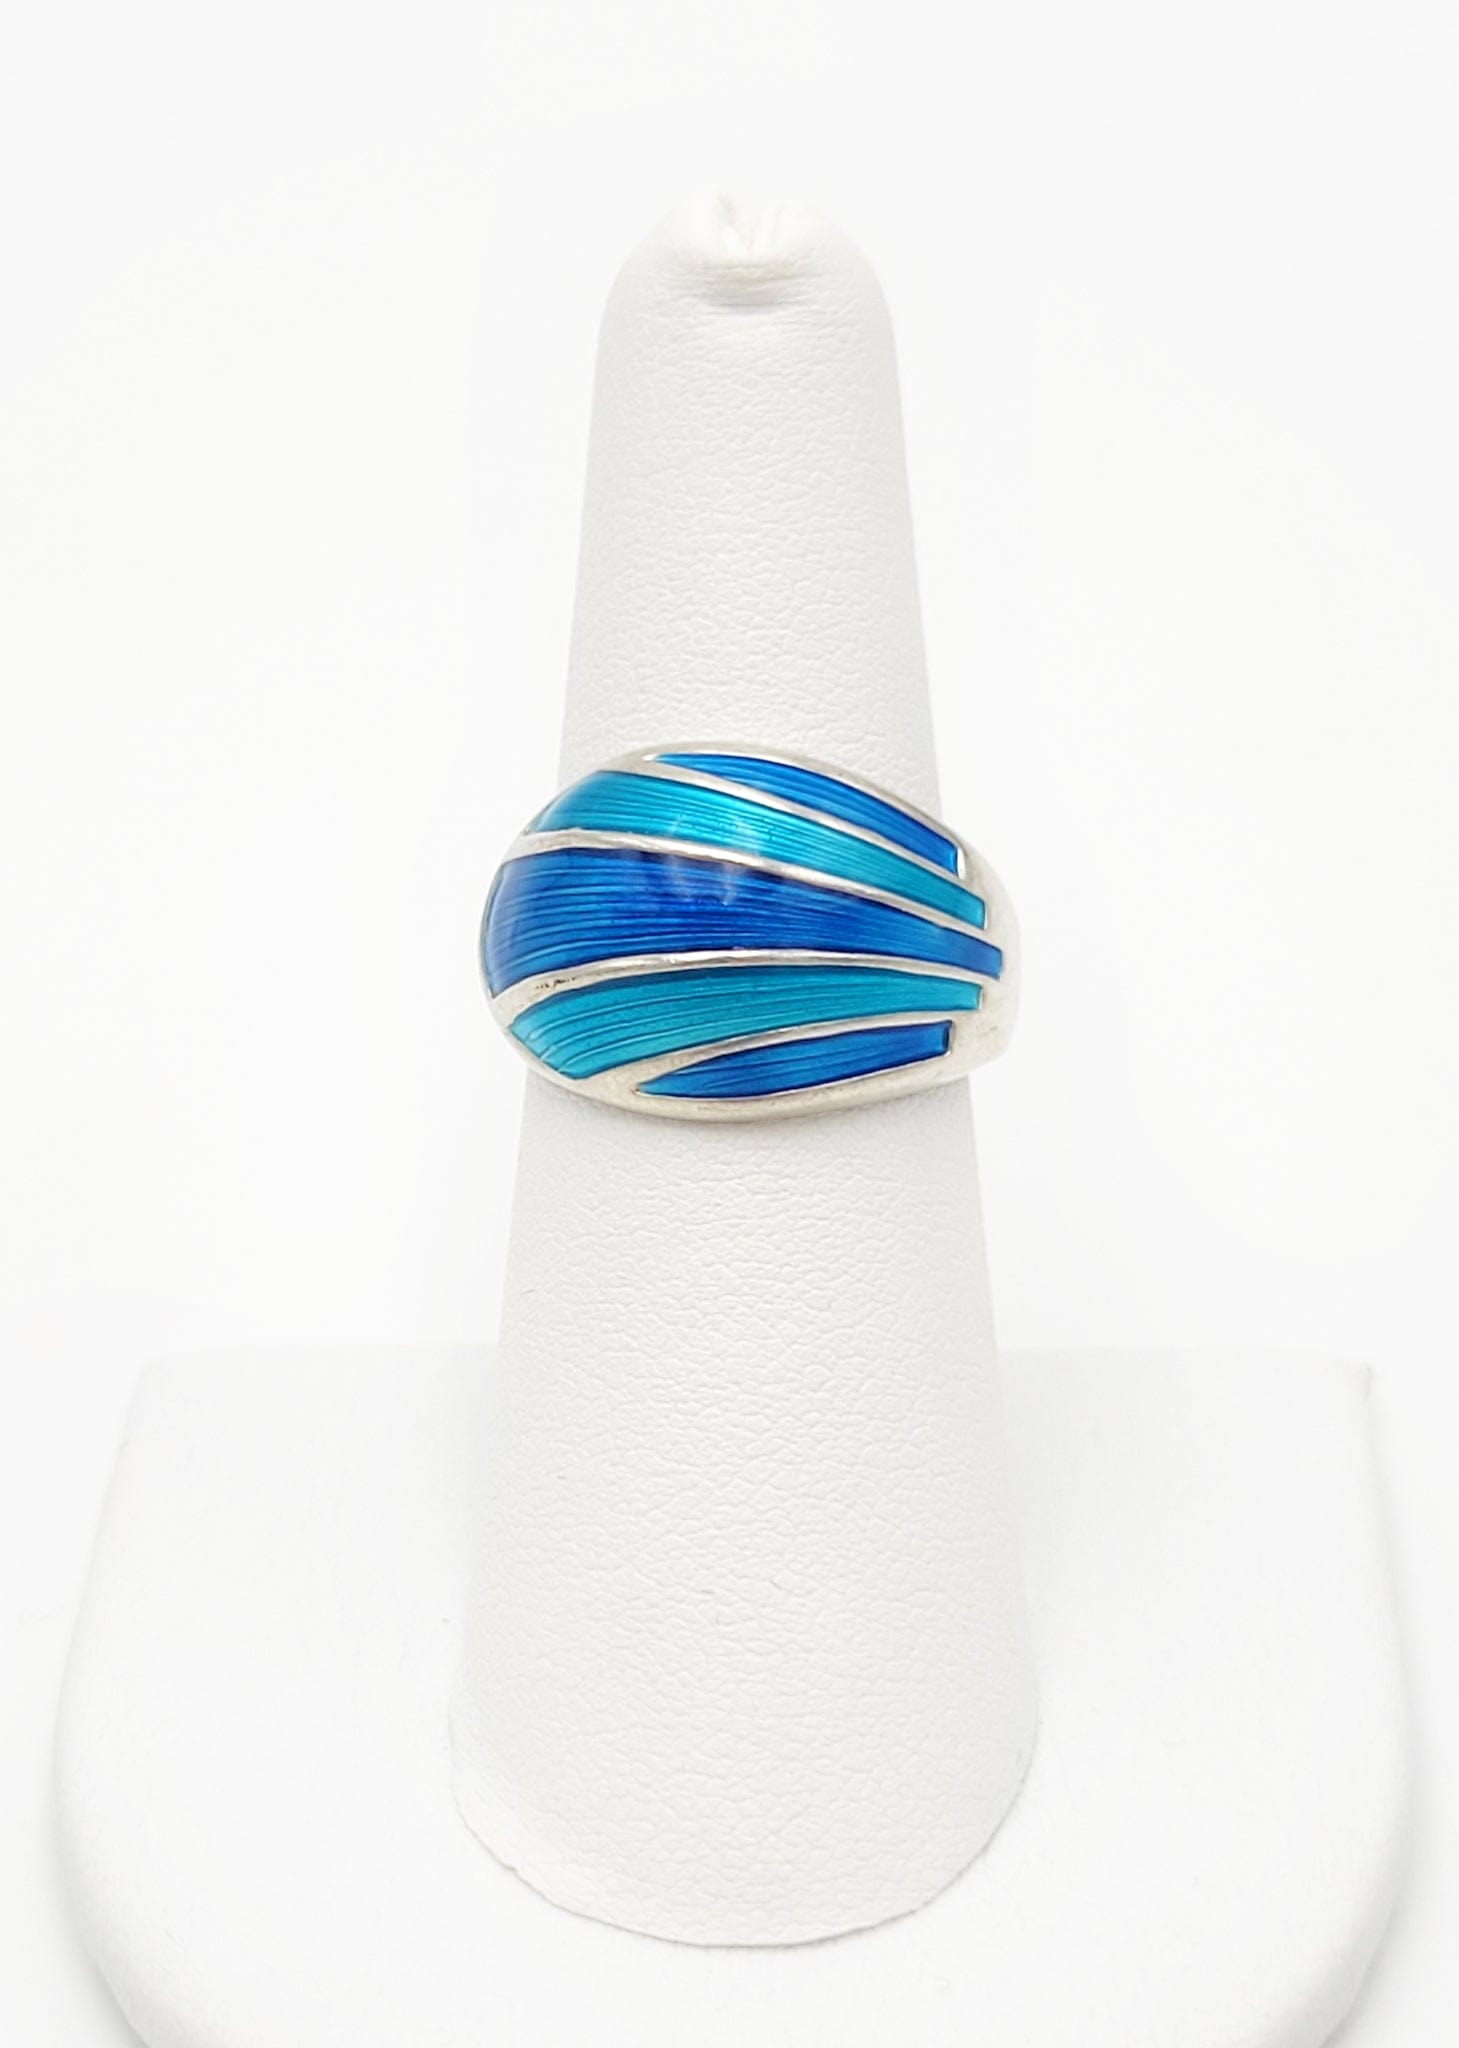 David Andersen Jewelry Norwegian David Andersen Sterling & Blue Enamel Wrap Ring Circa 1940/50s